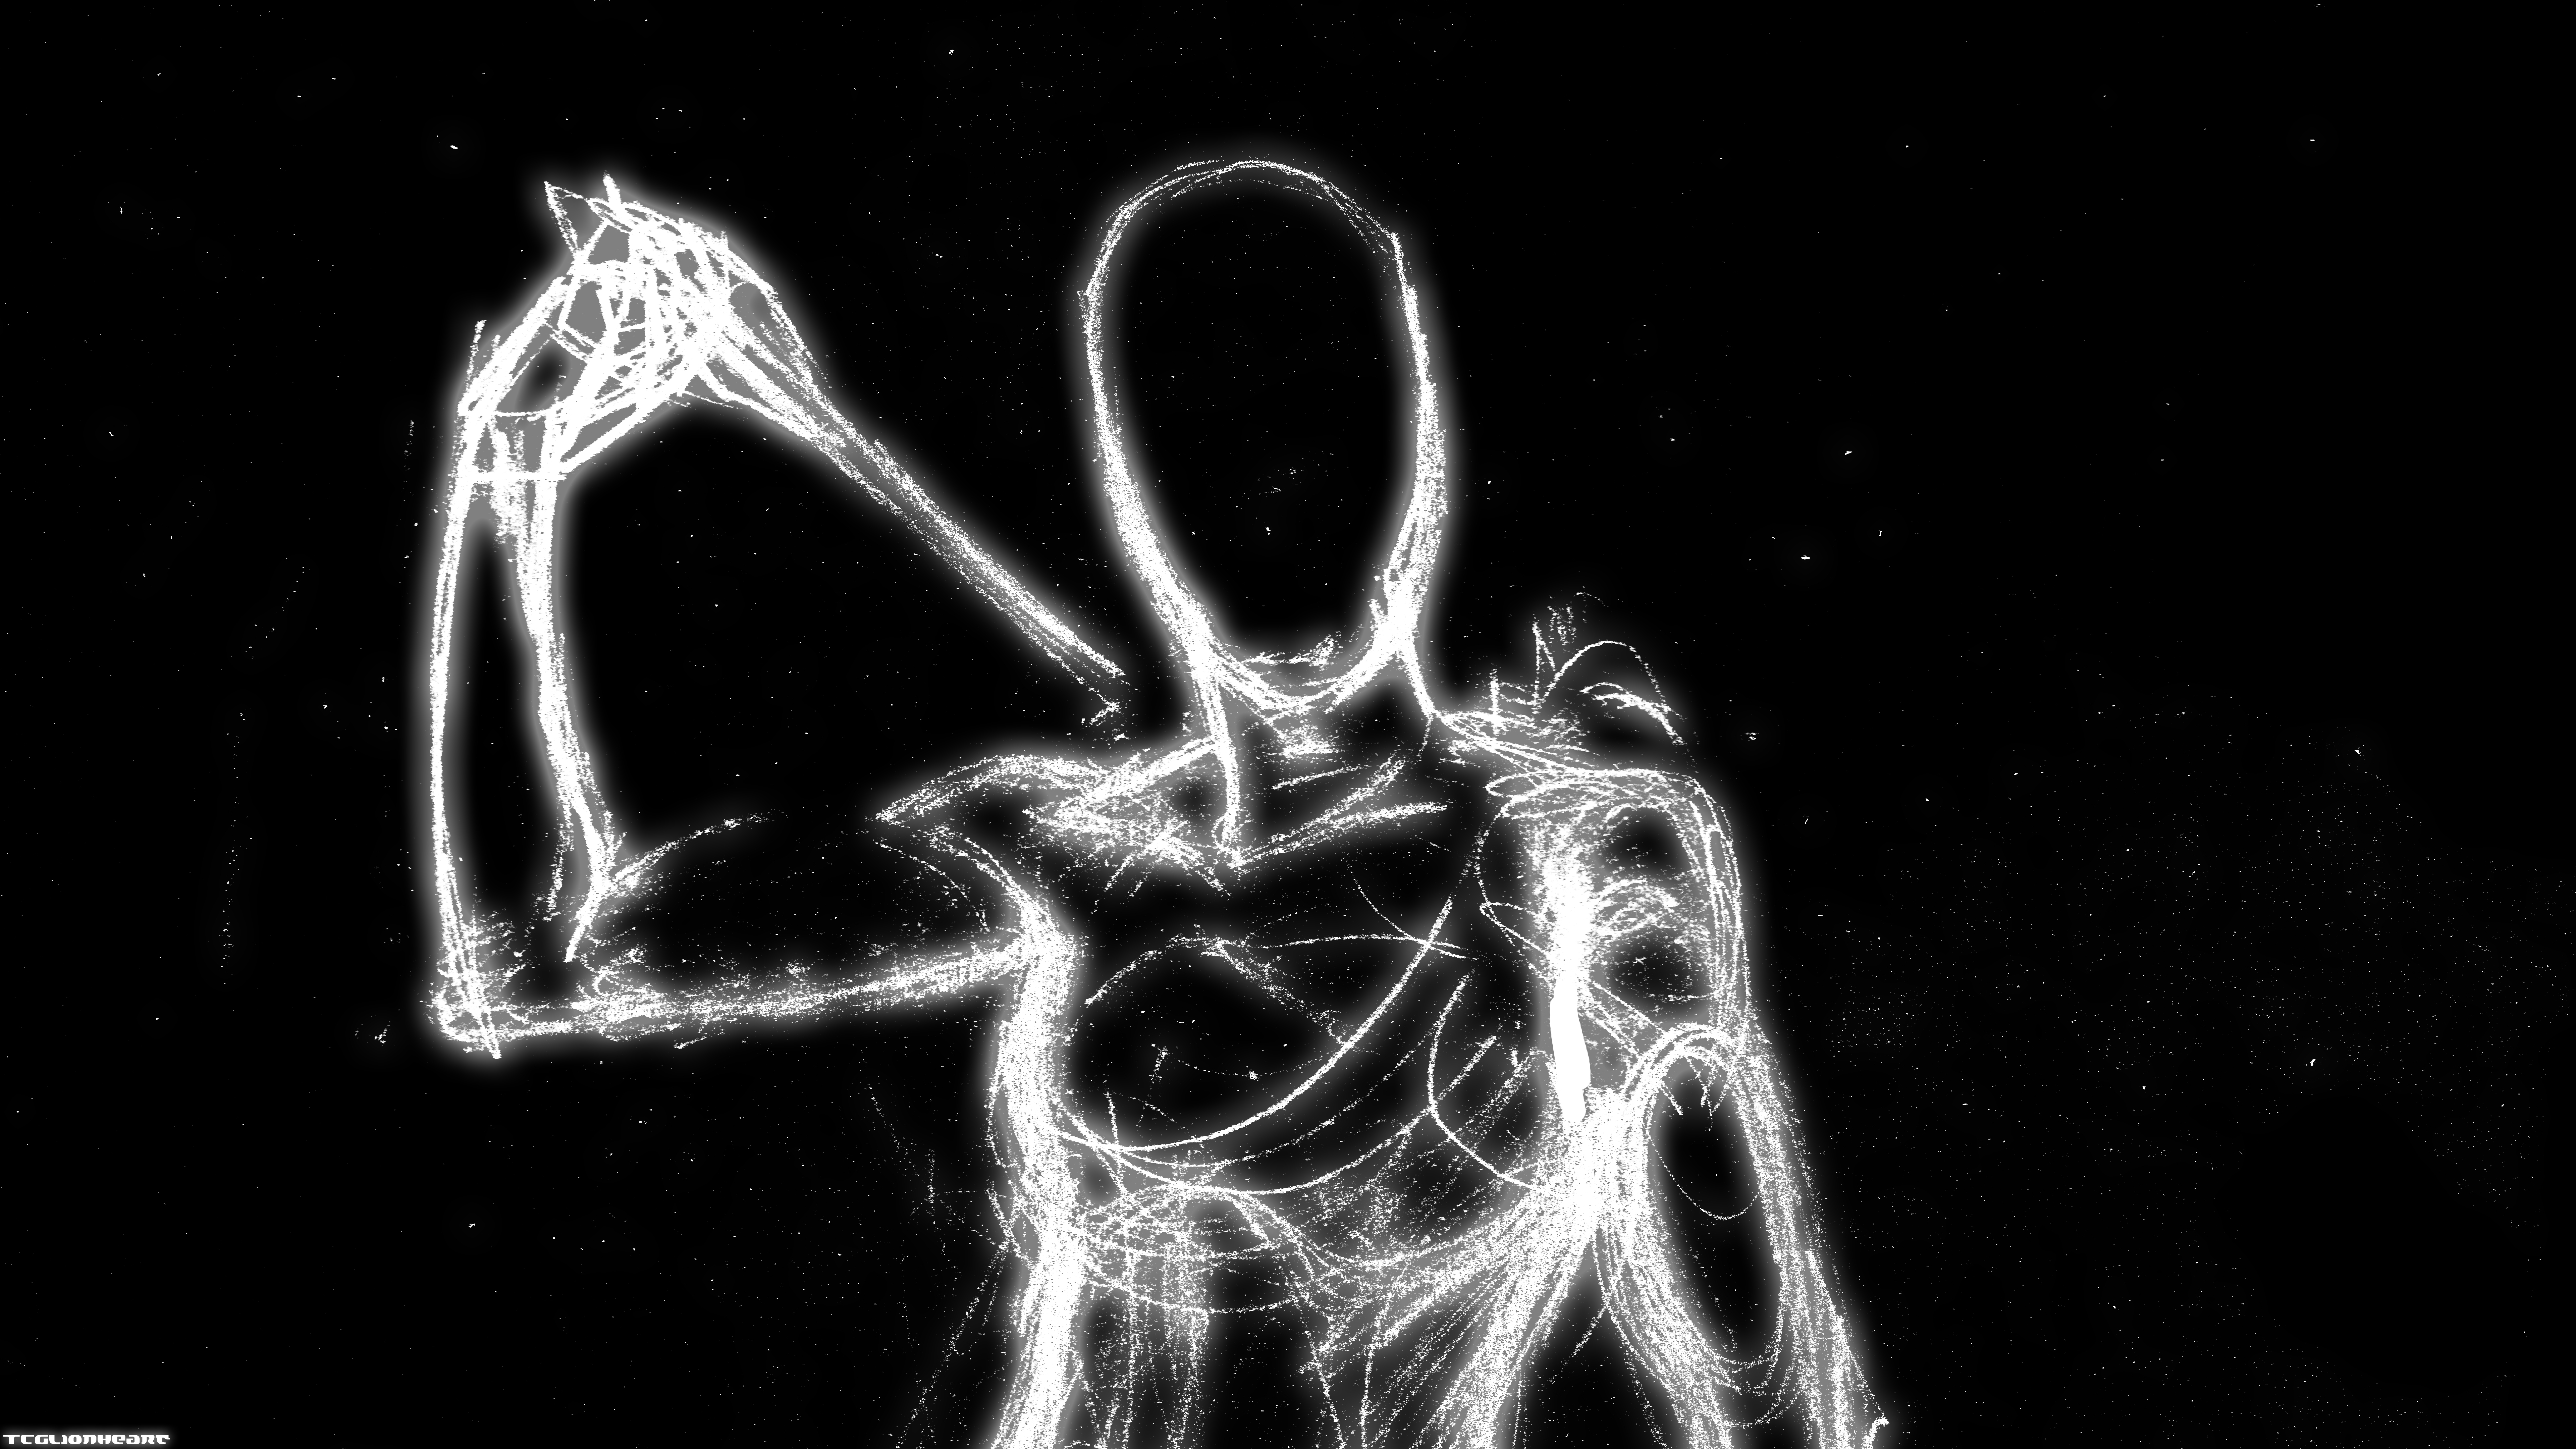 General 7680x4320 stars archer women digital art simple background watermarked